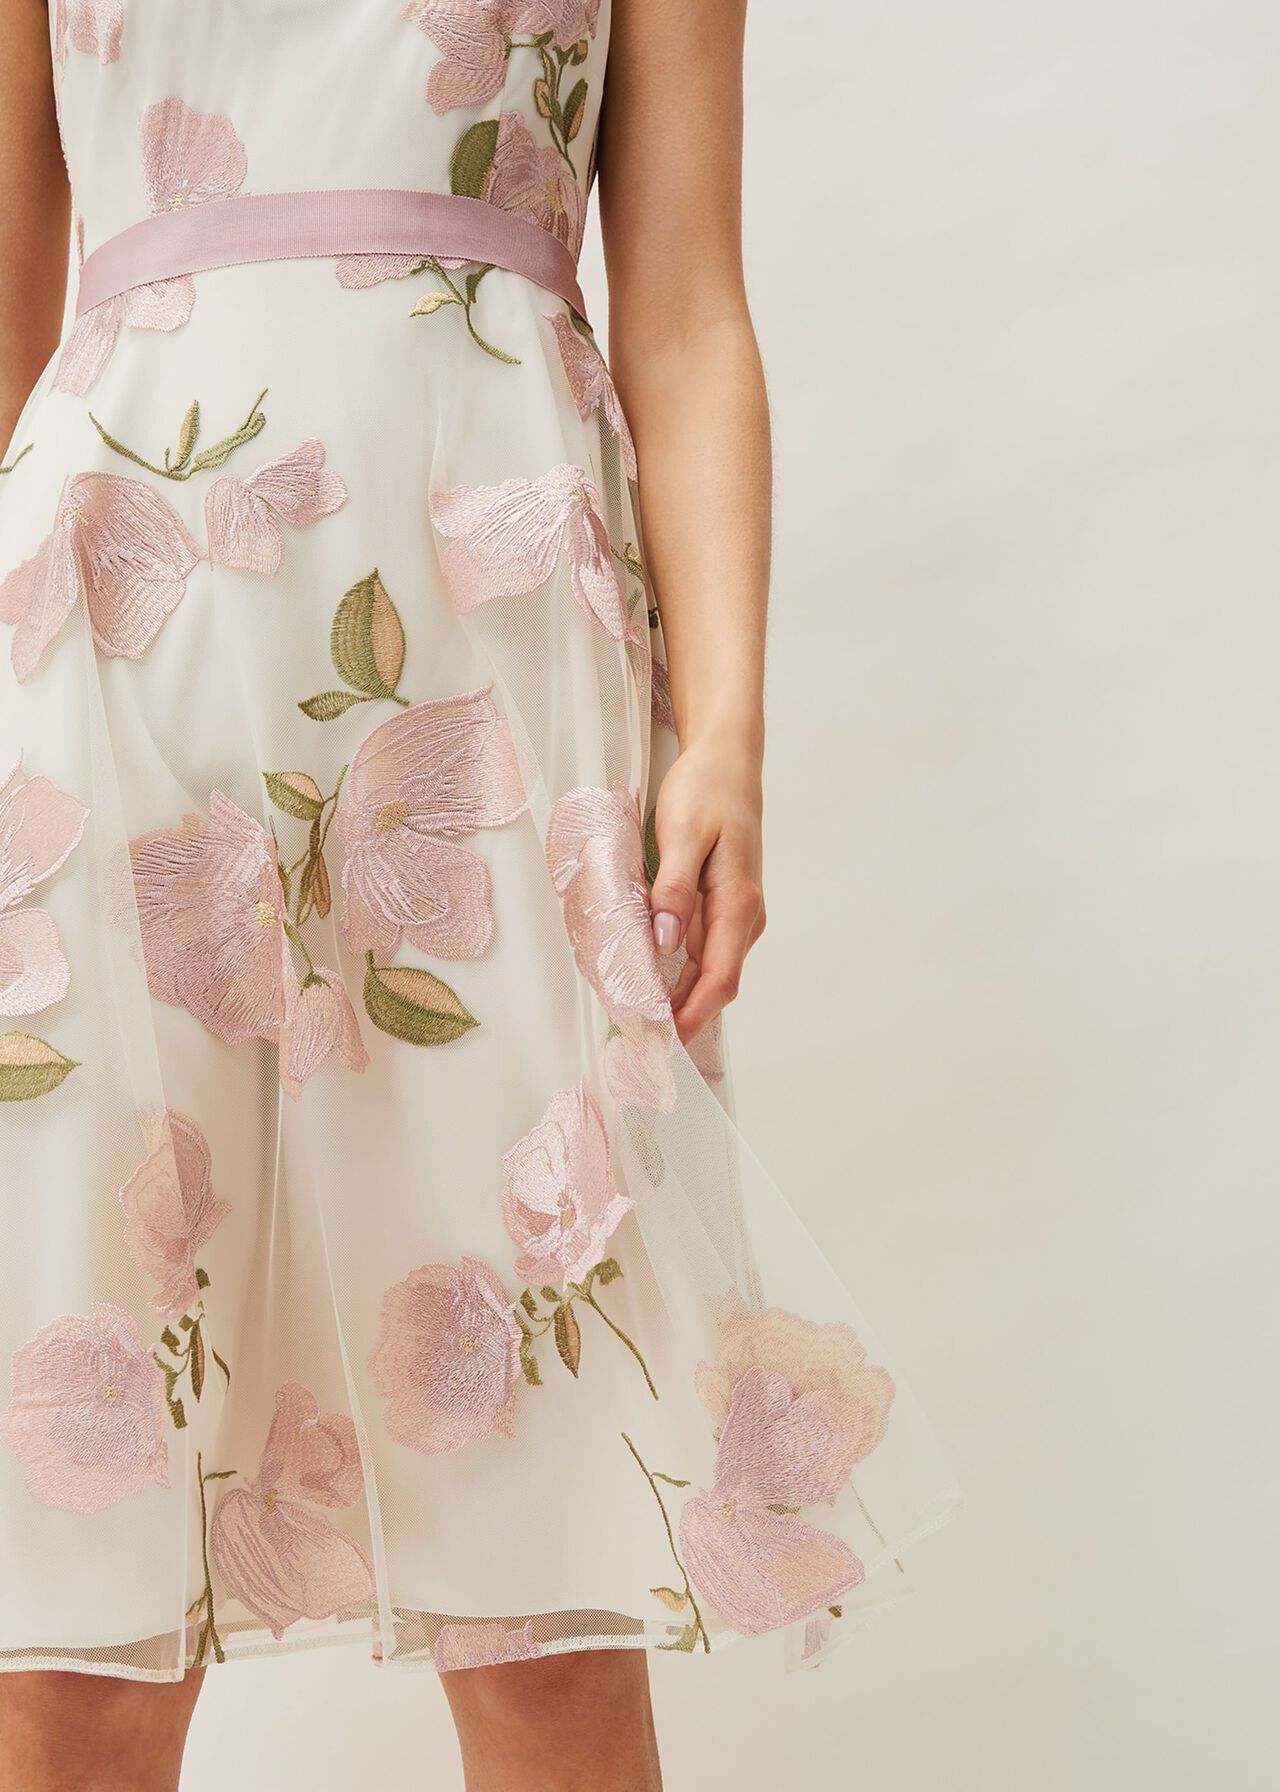 Charlotte Floral Embroidered Dress